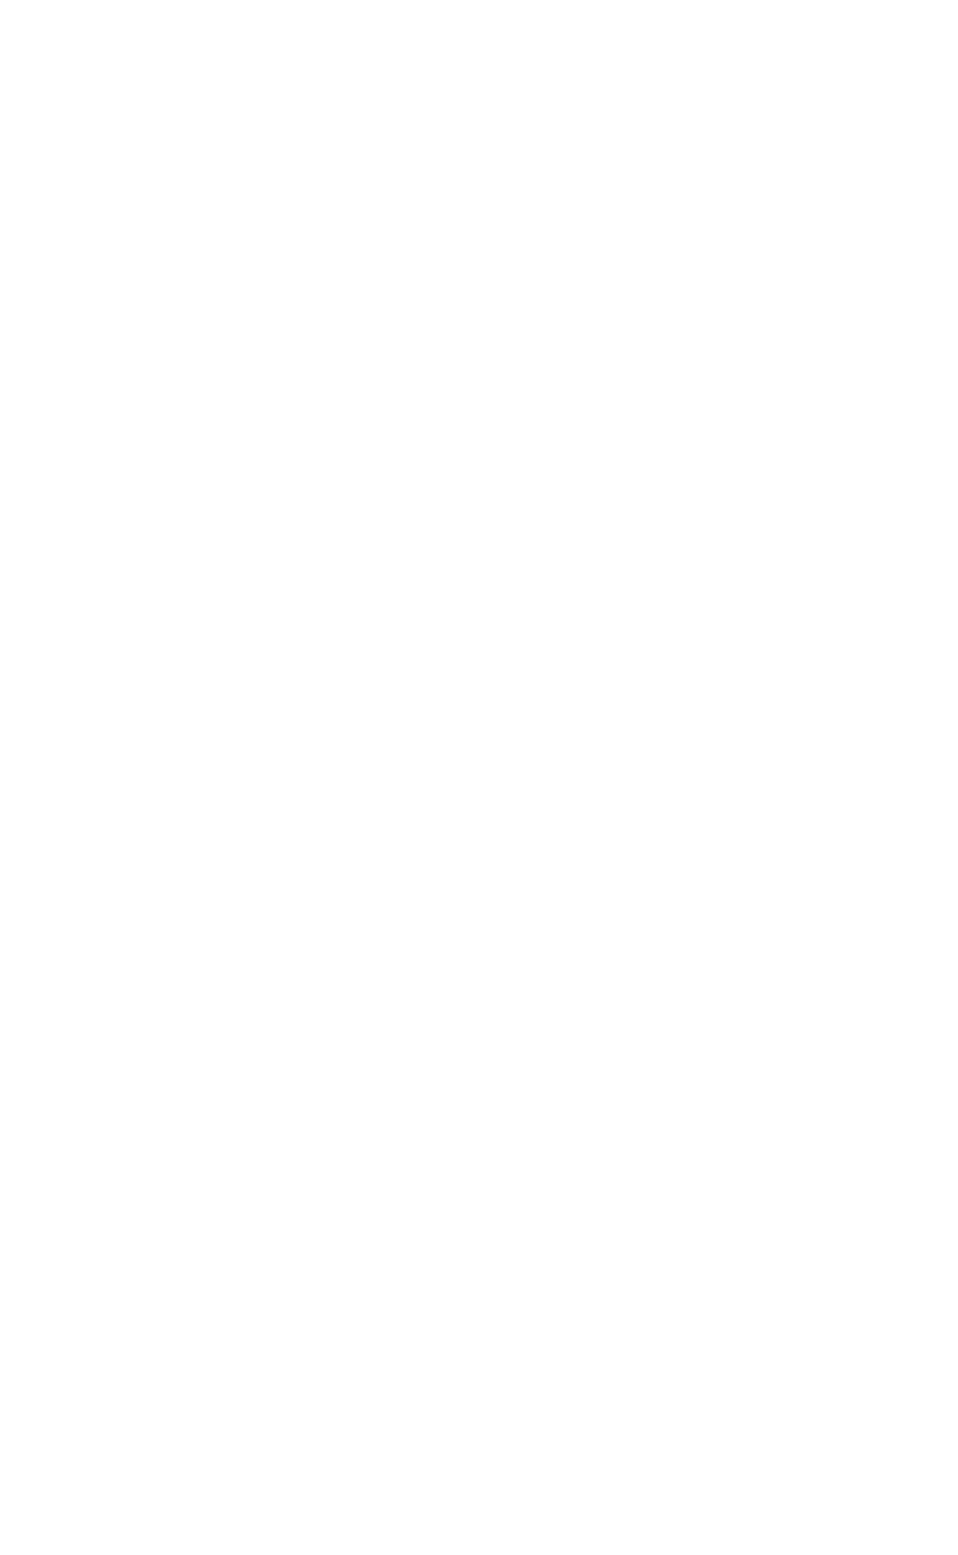 Unum logo for dark backgrounds (transparent PNG)